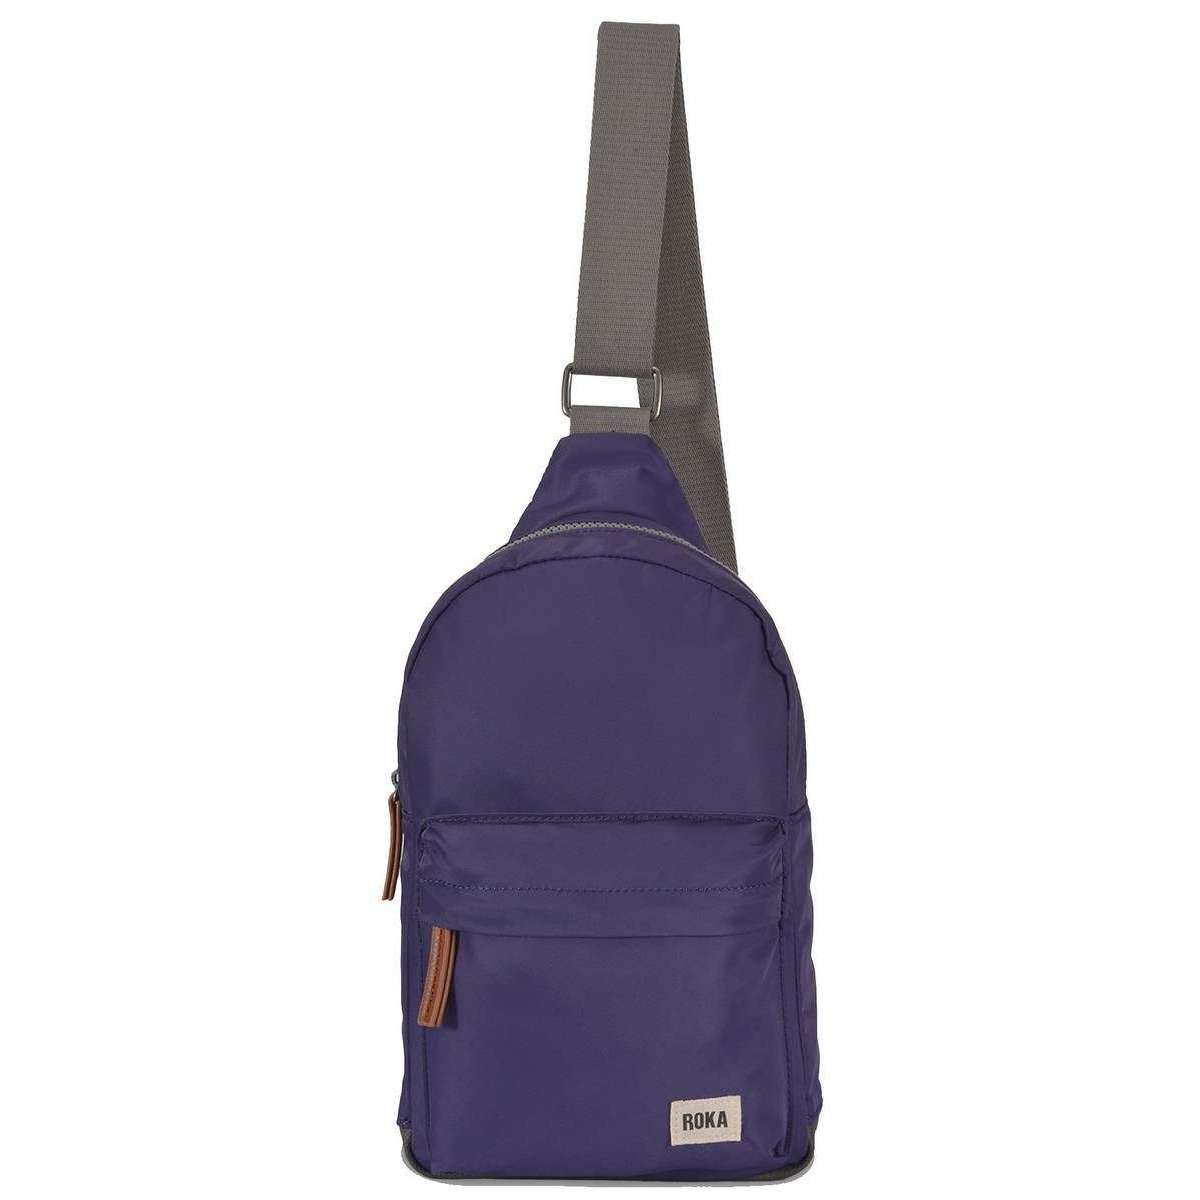 Roka Willesden B Sustainable Nylon Scooter Bag - Mullberry Purple